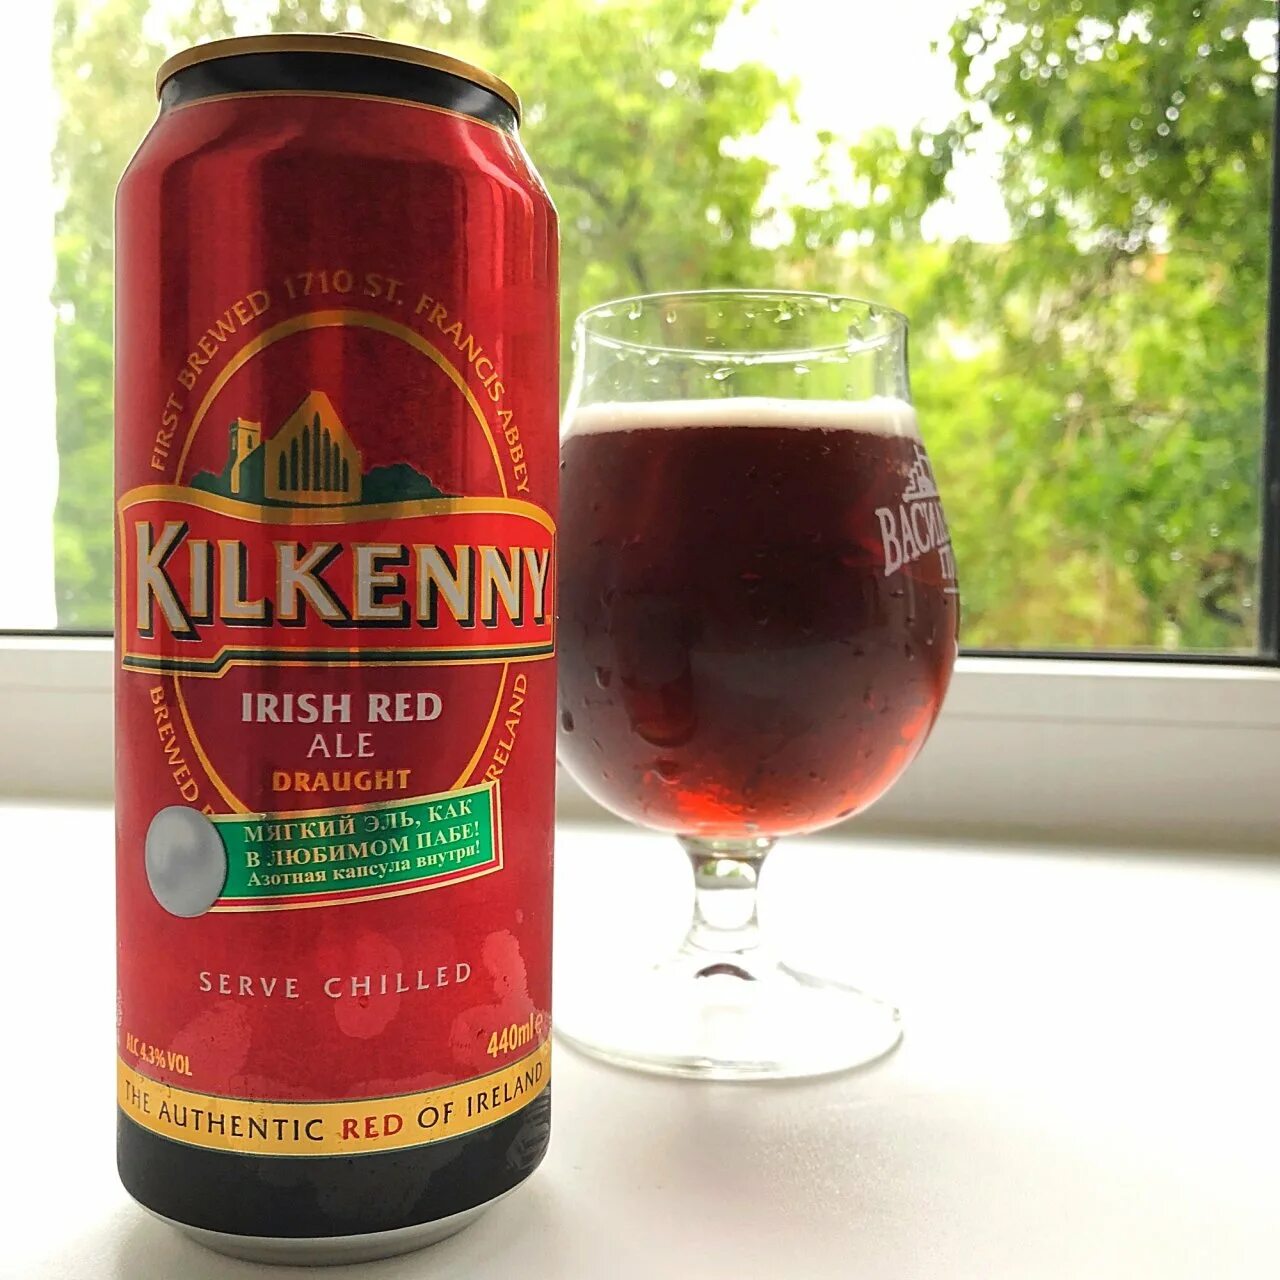 Kilkenny Draught пиво темное. Ирландский Эль Kilkenny. Пиво темное Килкенни ДРАФТ. Kilkenny Irish Red пиво. Irish red